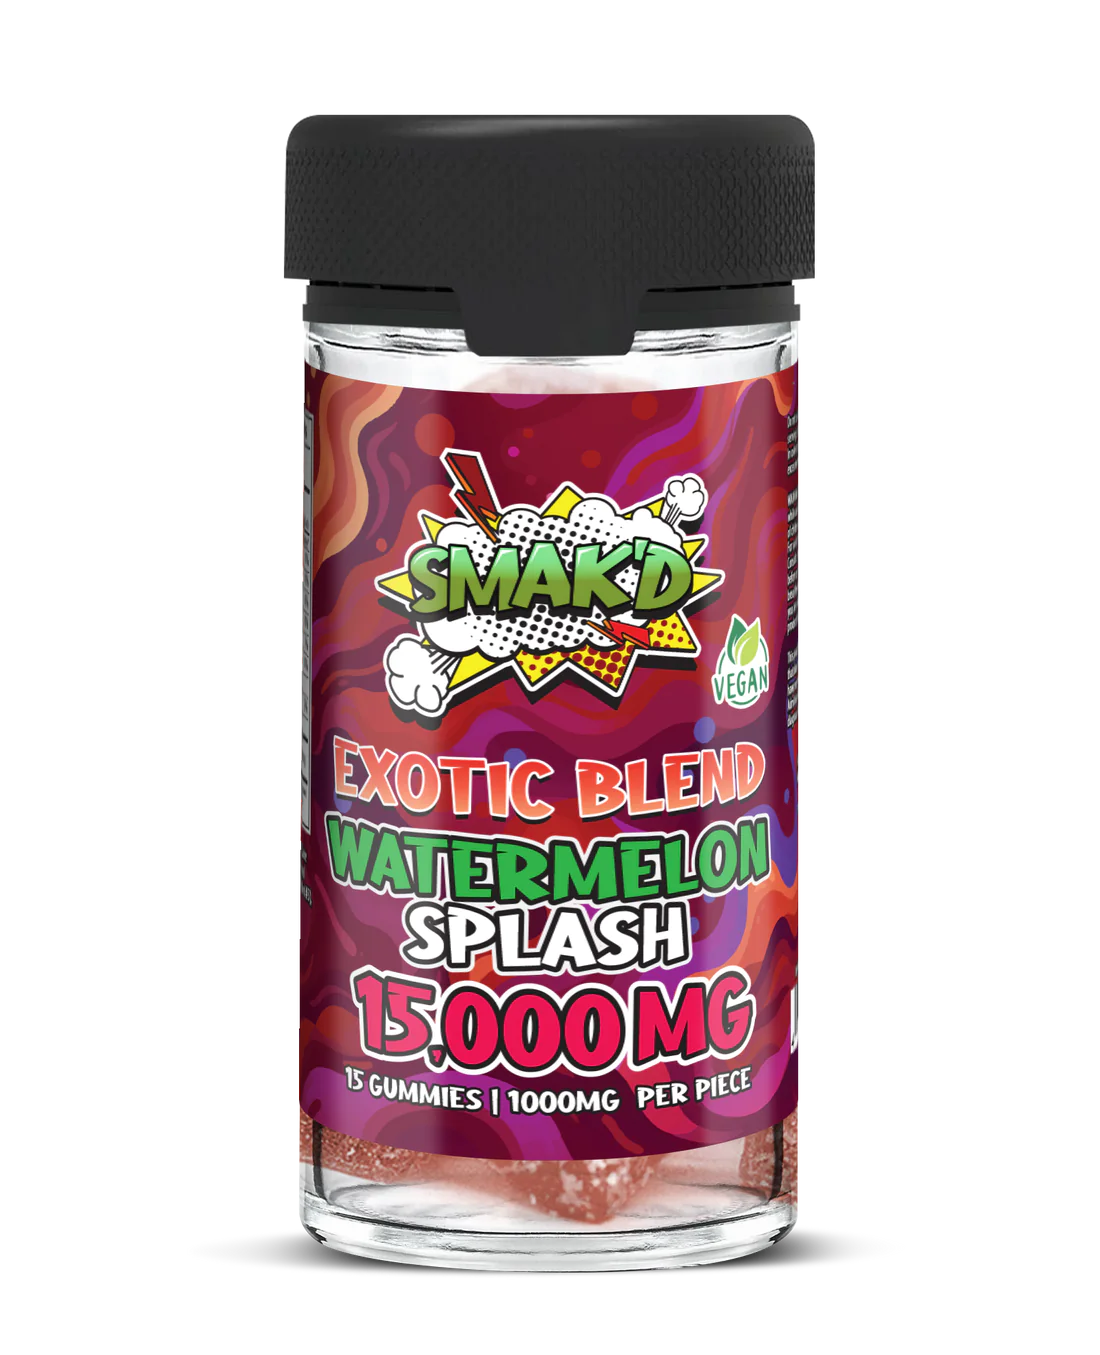 SMAK'D Exotic Blend Gummies - Watermelon Splash